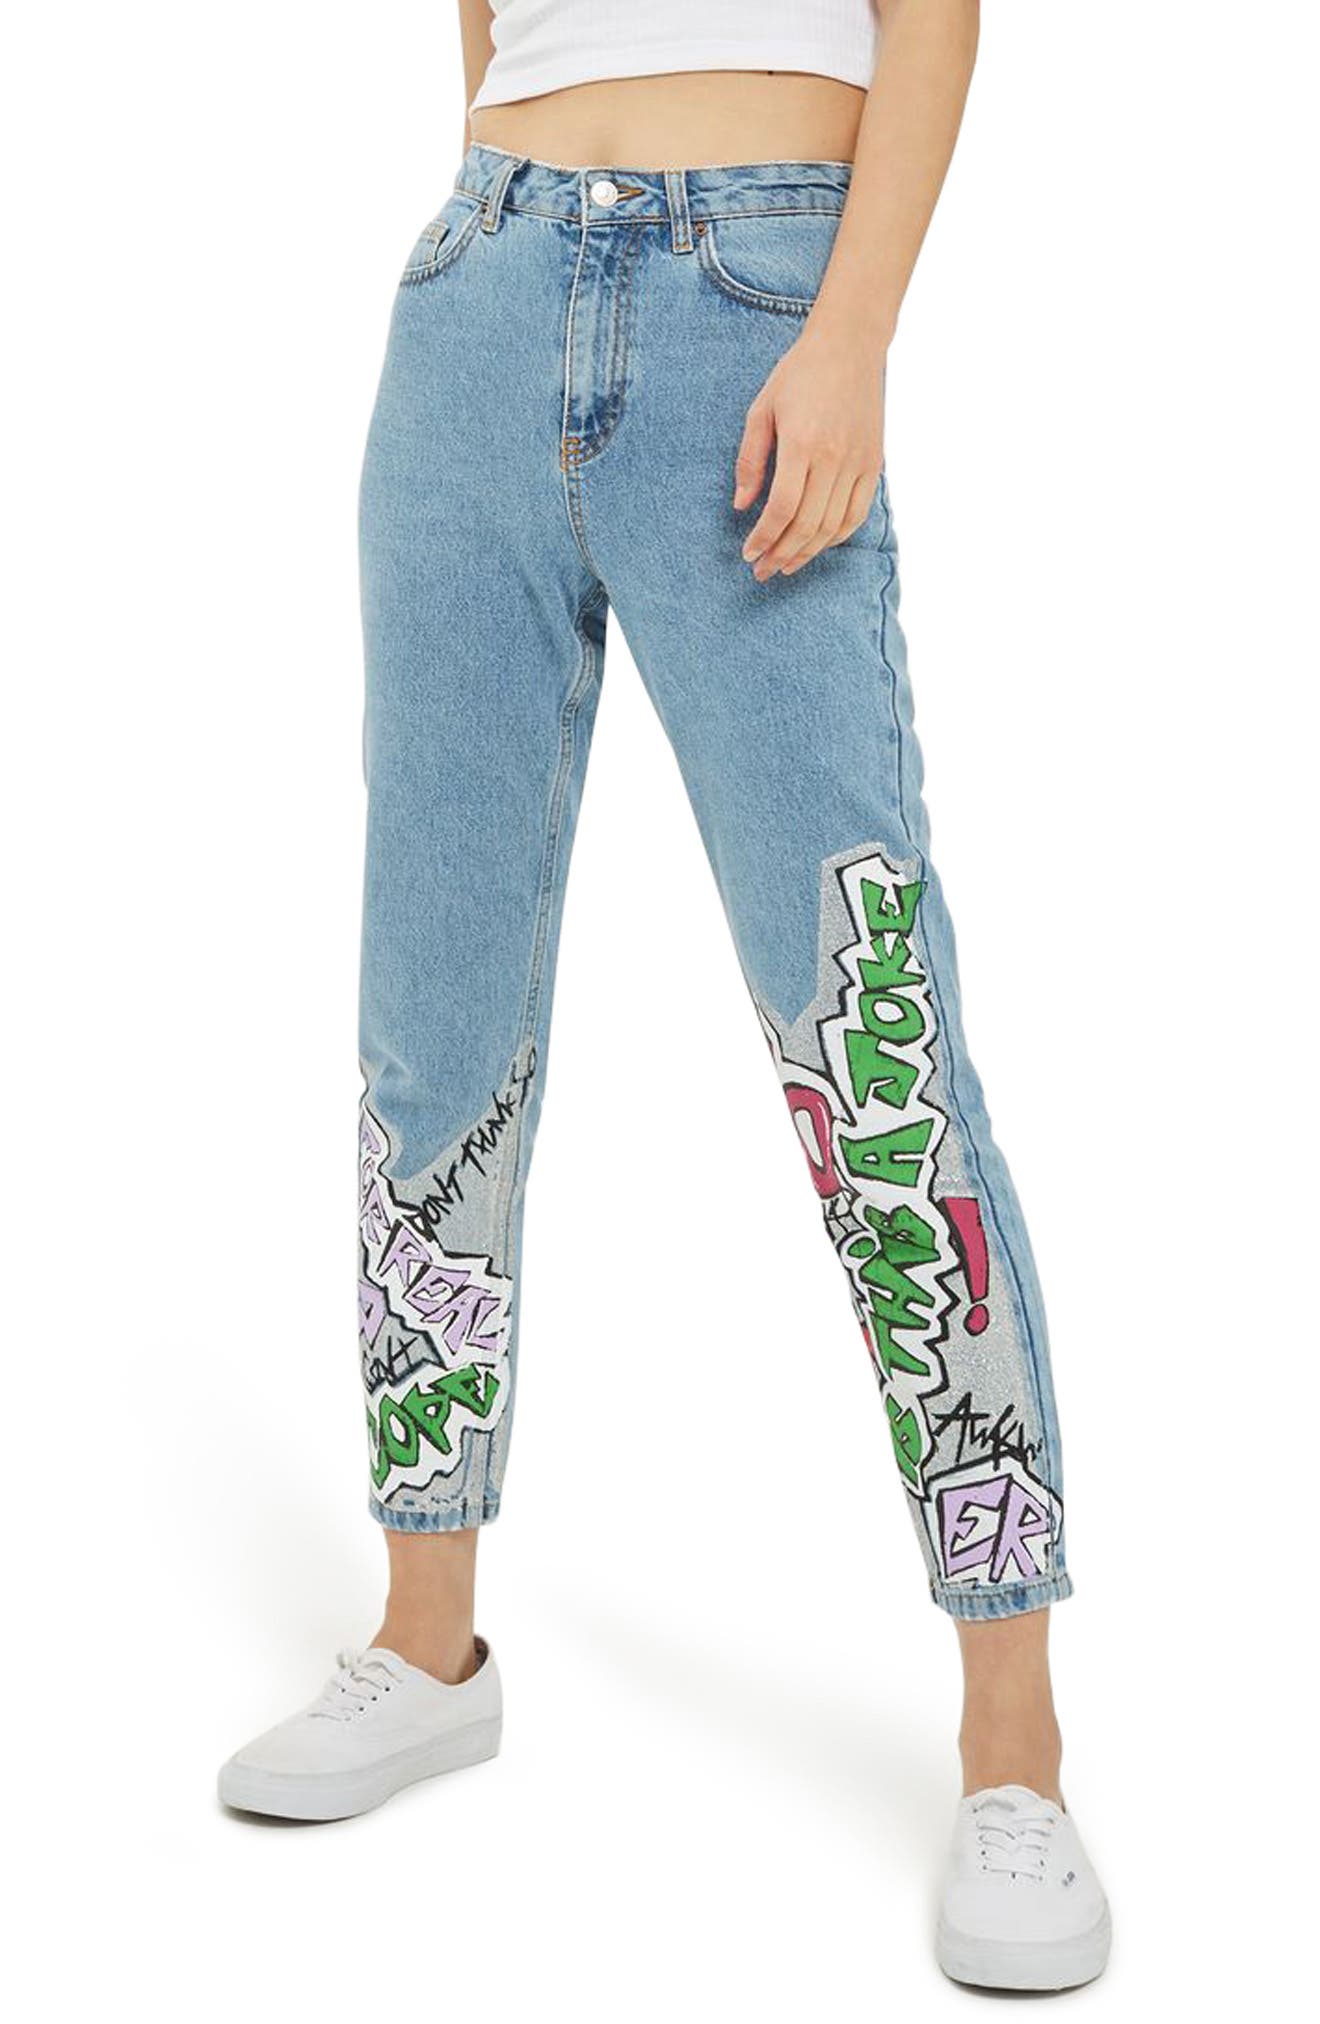 topshop graffiti jeans